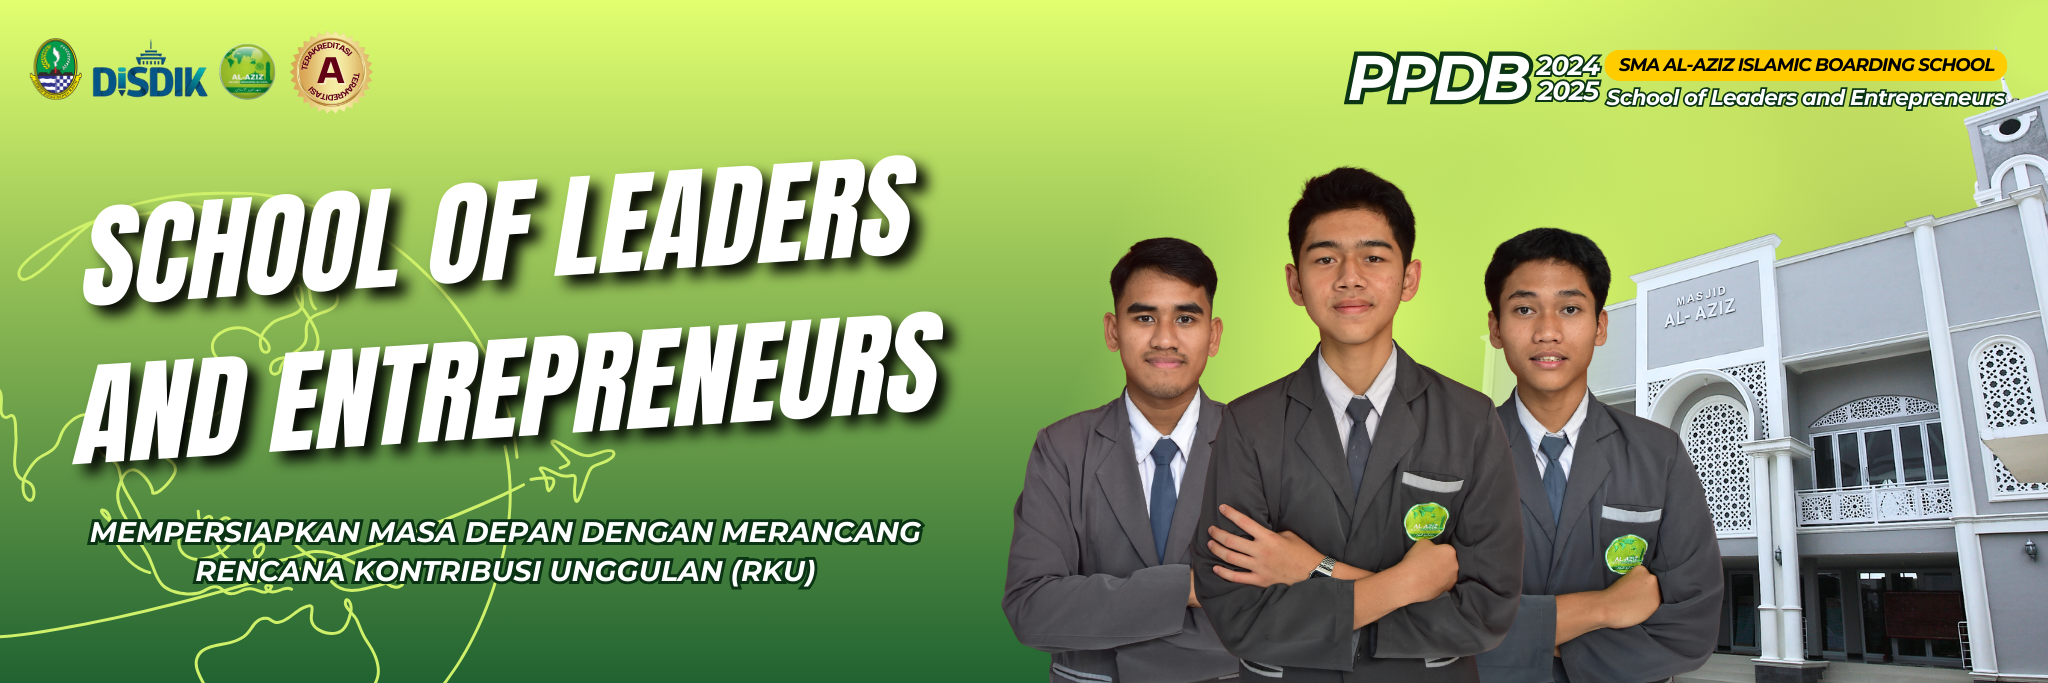 school_of_leaders_and_entrepreneurs